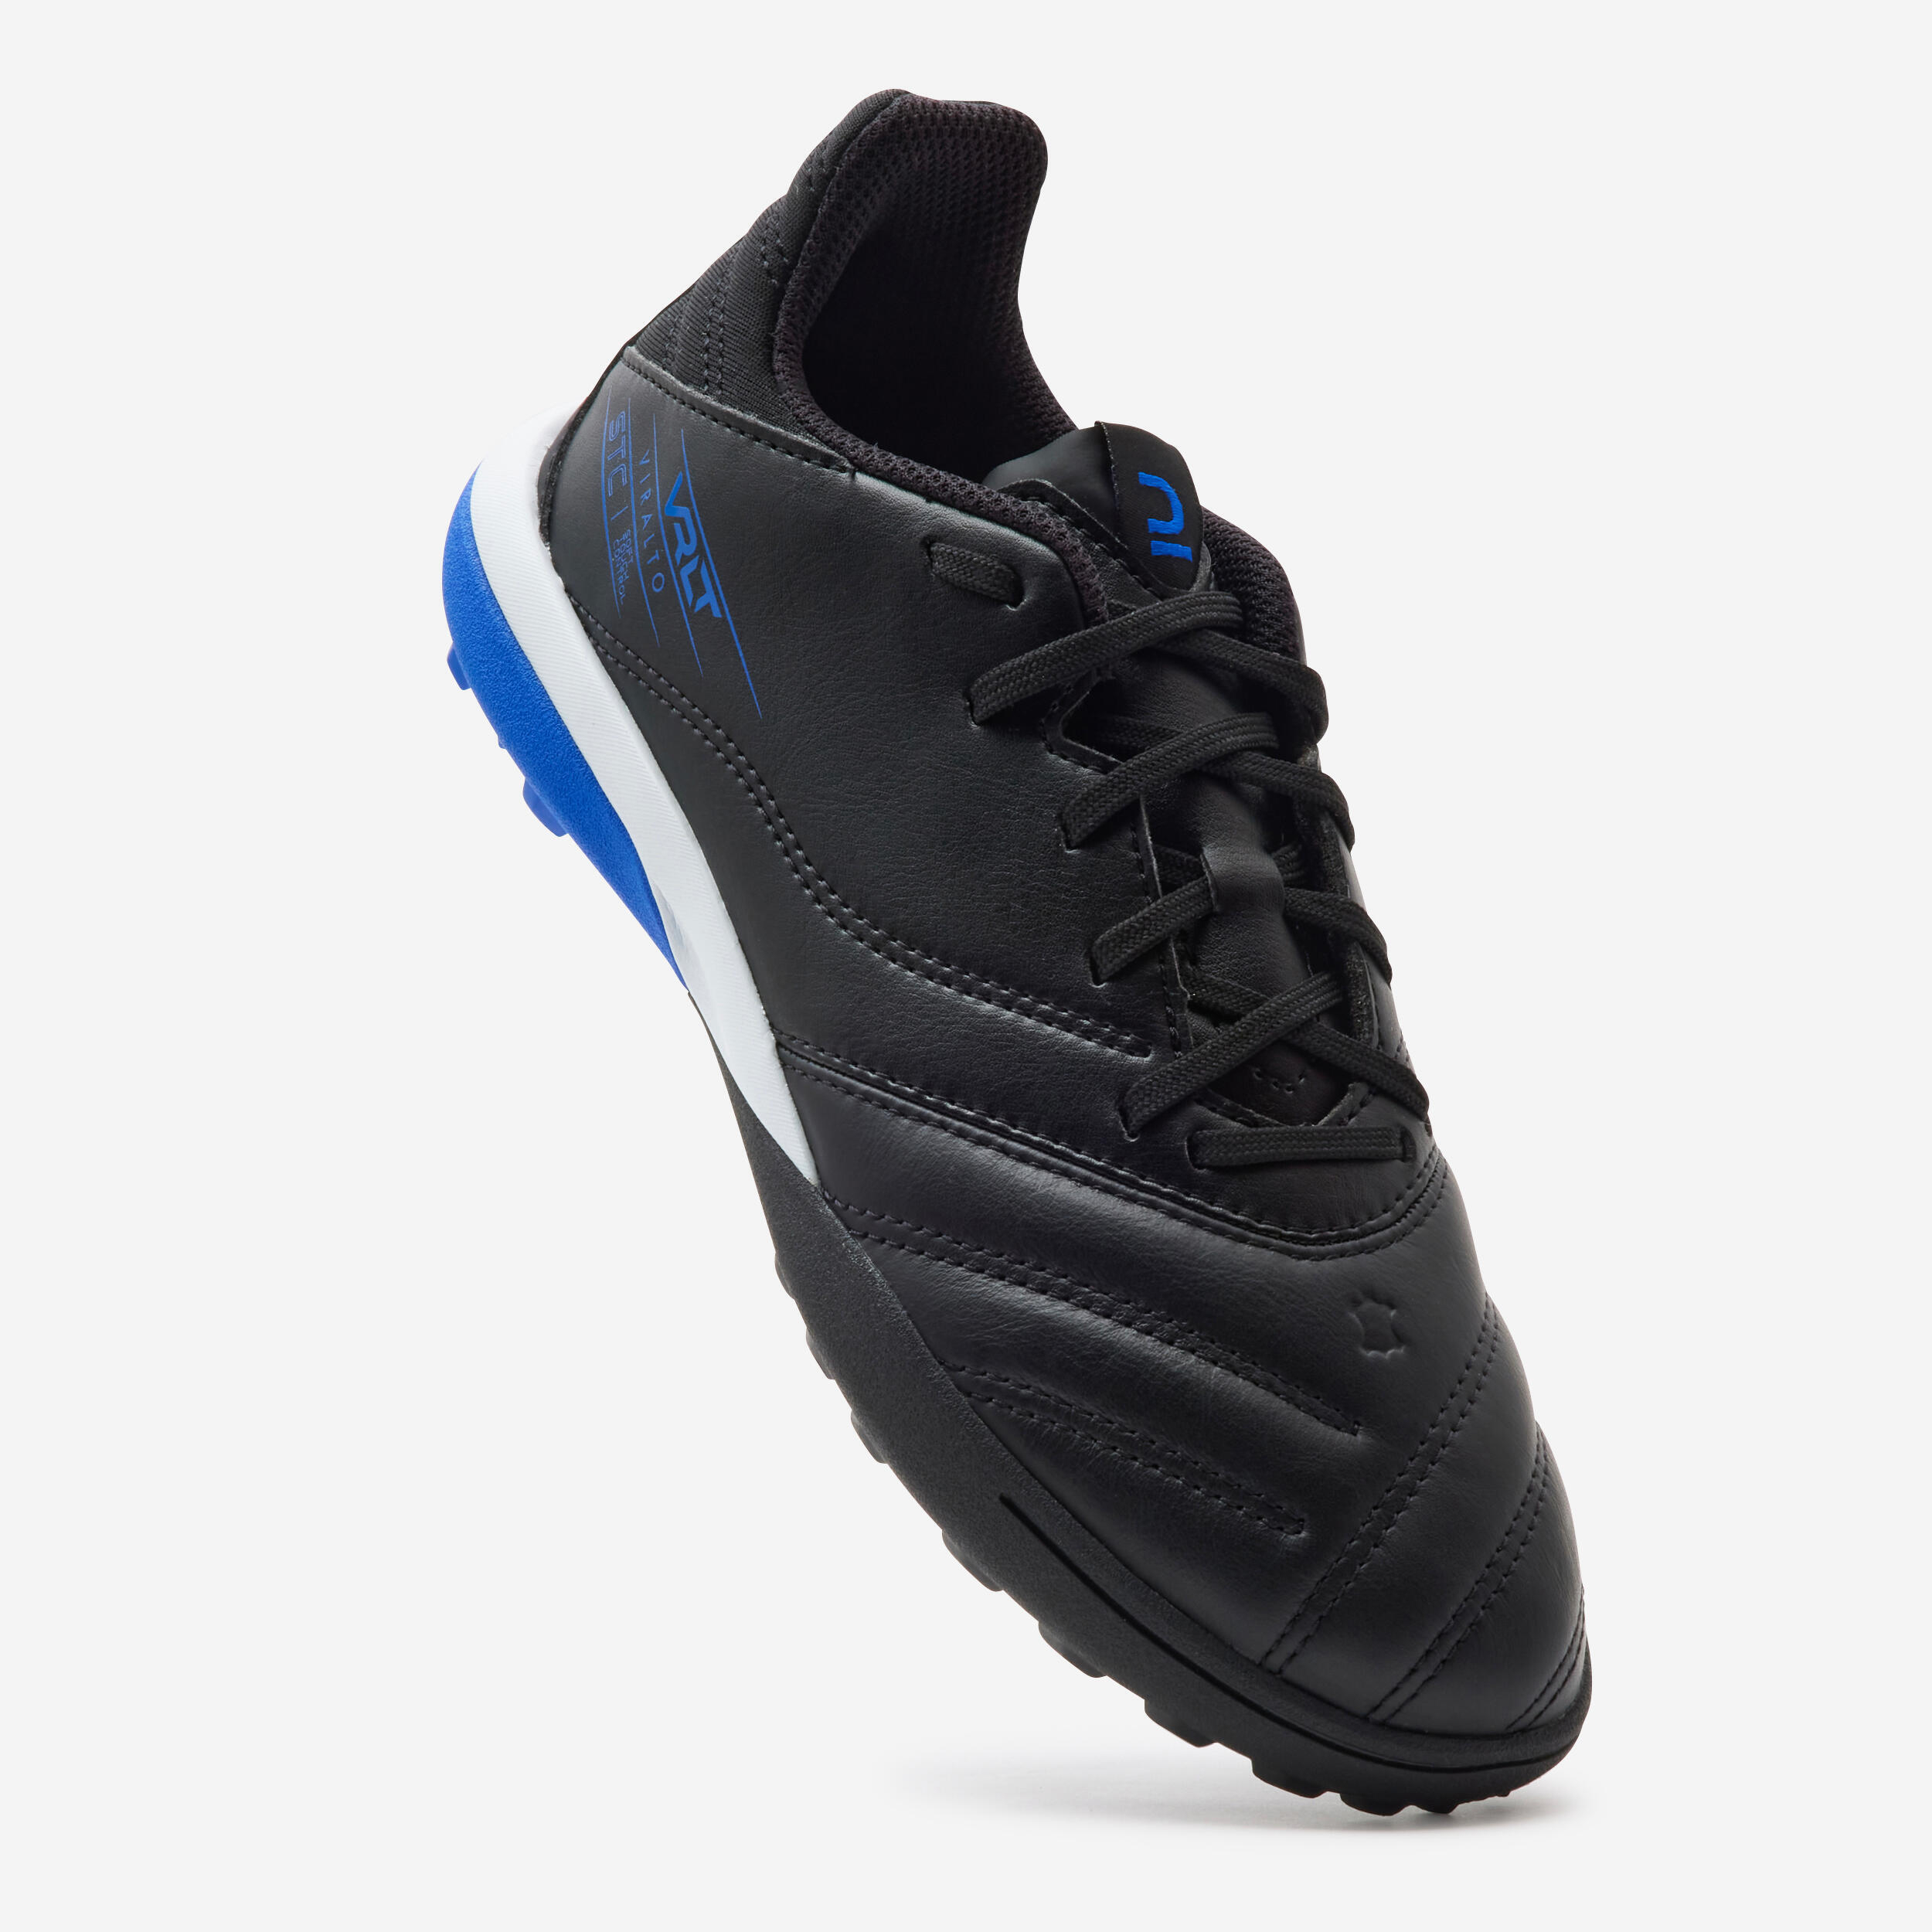 Kids' Lace-Up Leather Football Boots Viralto II Turf - Black/Lightning 4/13